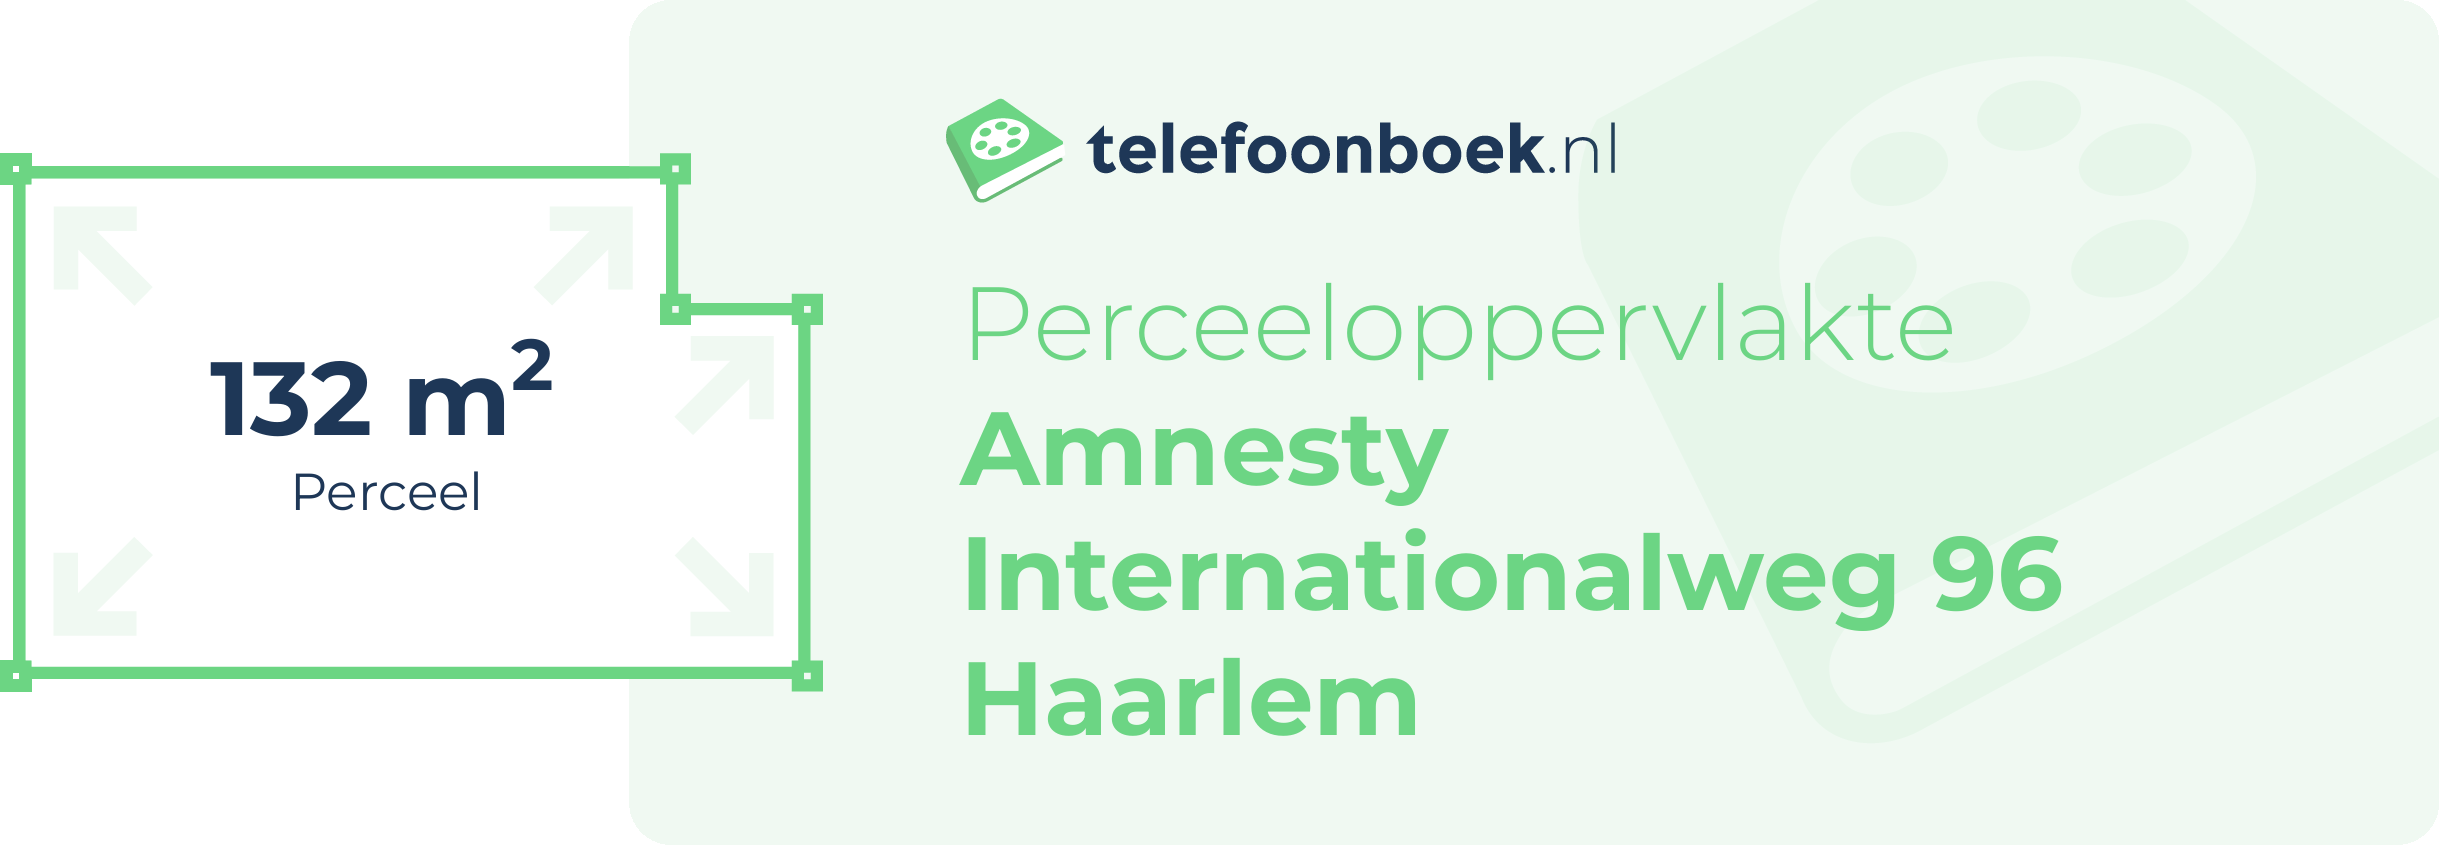 Perceeloppervlakte Amnesty Internationalweg 96 Haarlem